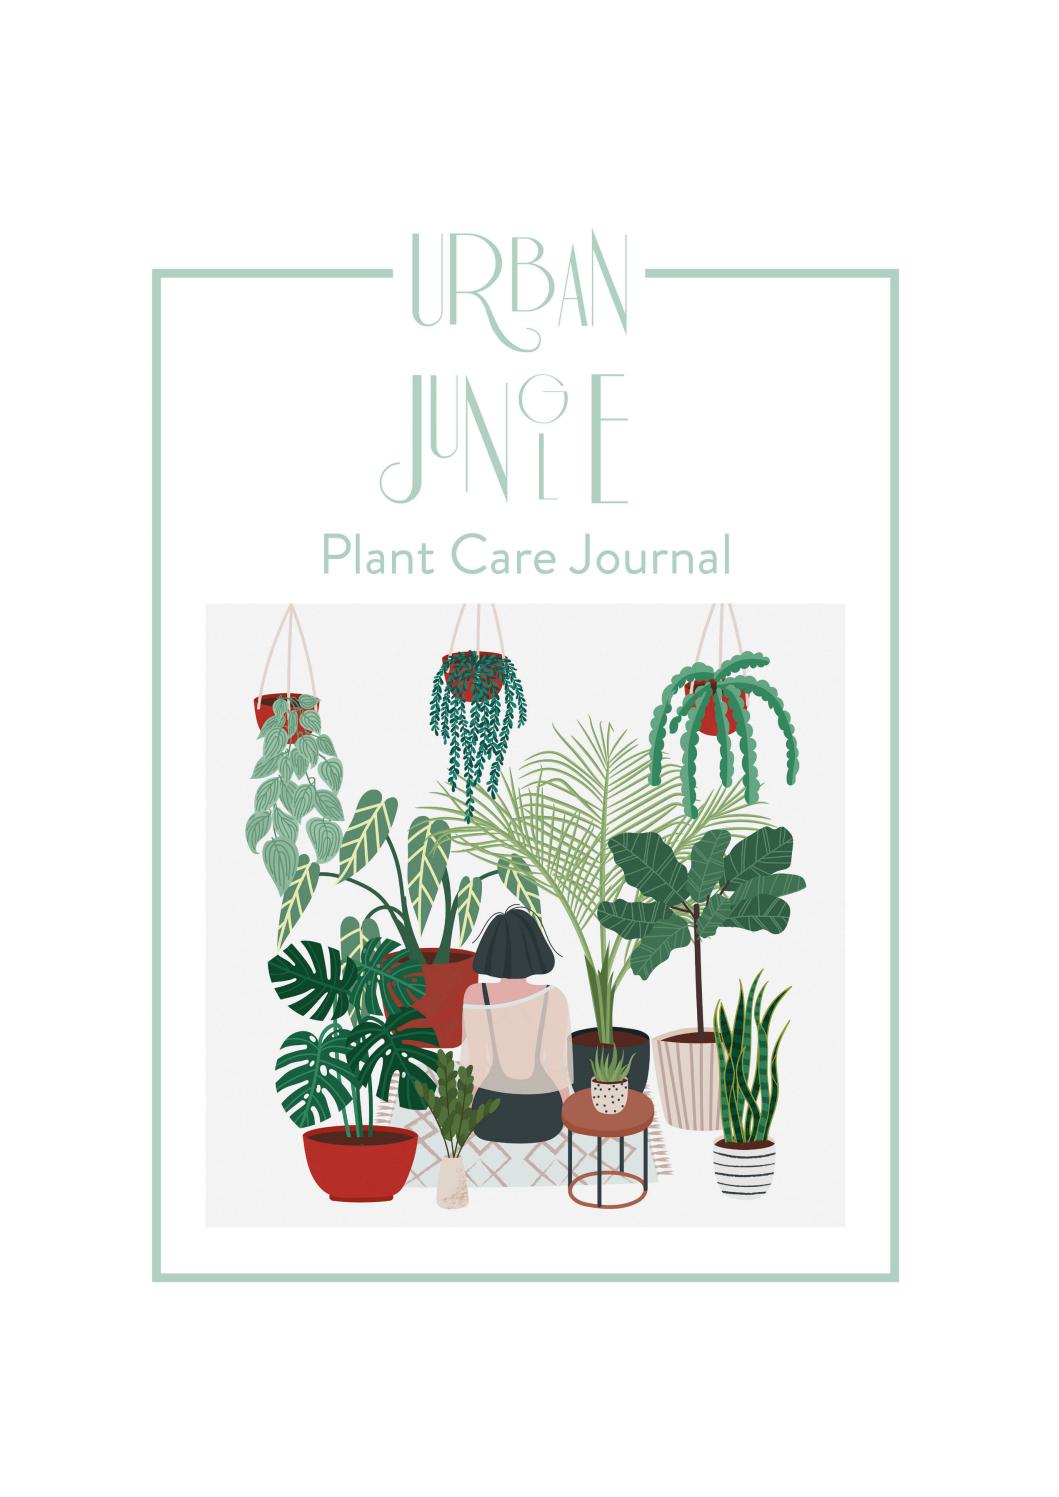 URBAN JUNGLE PLANT CARE JOURNAL